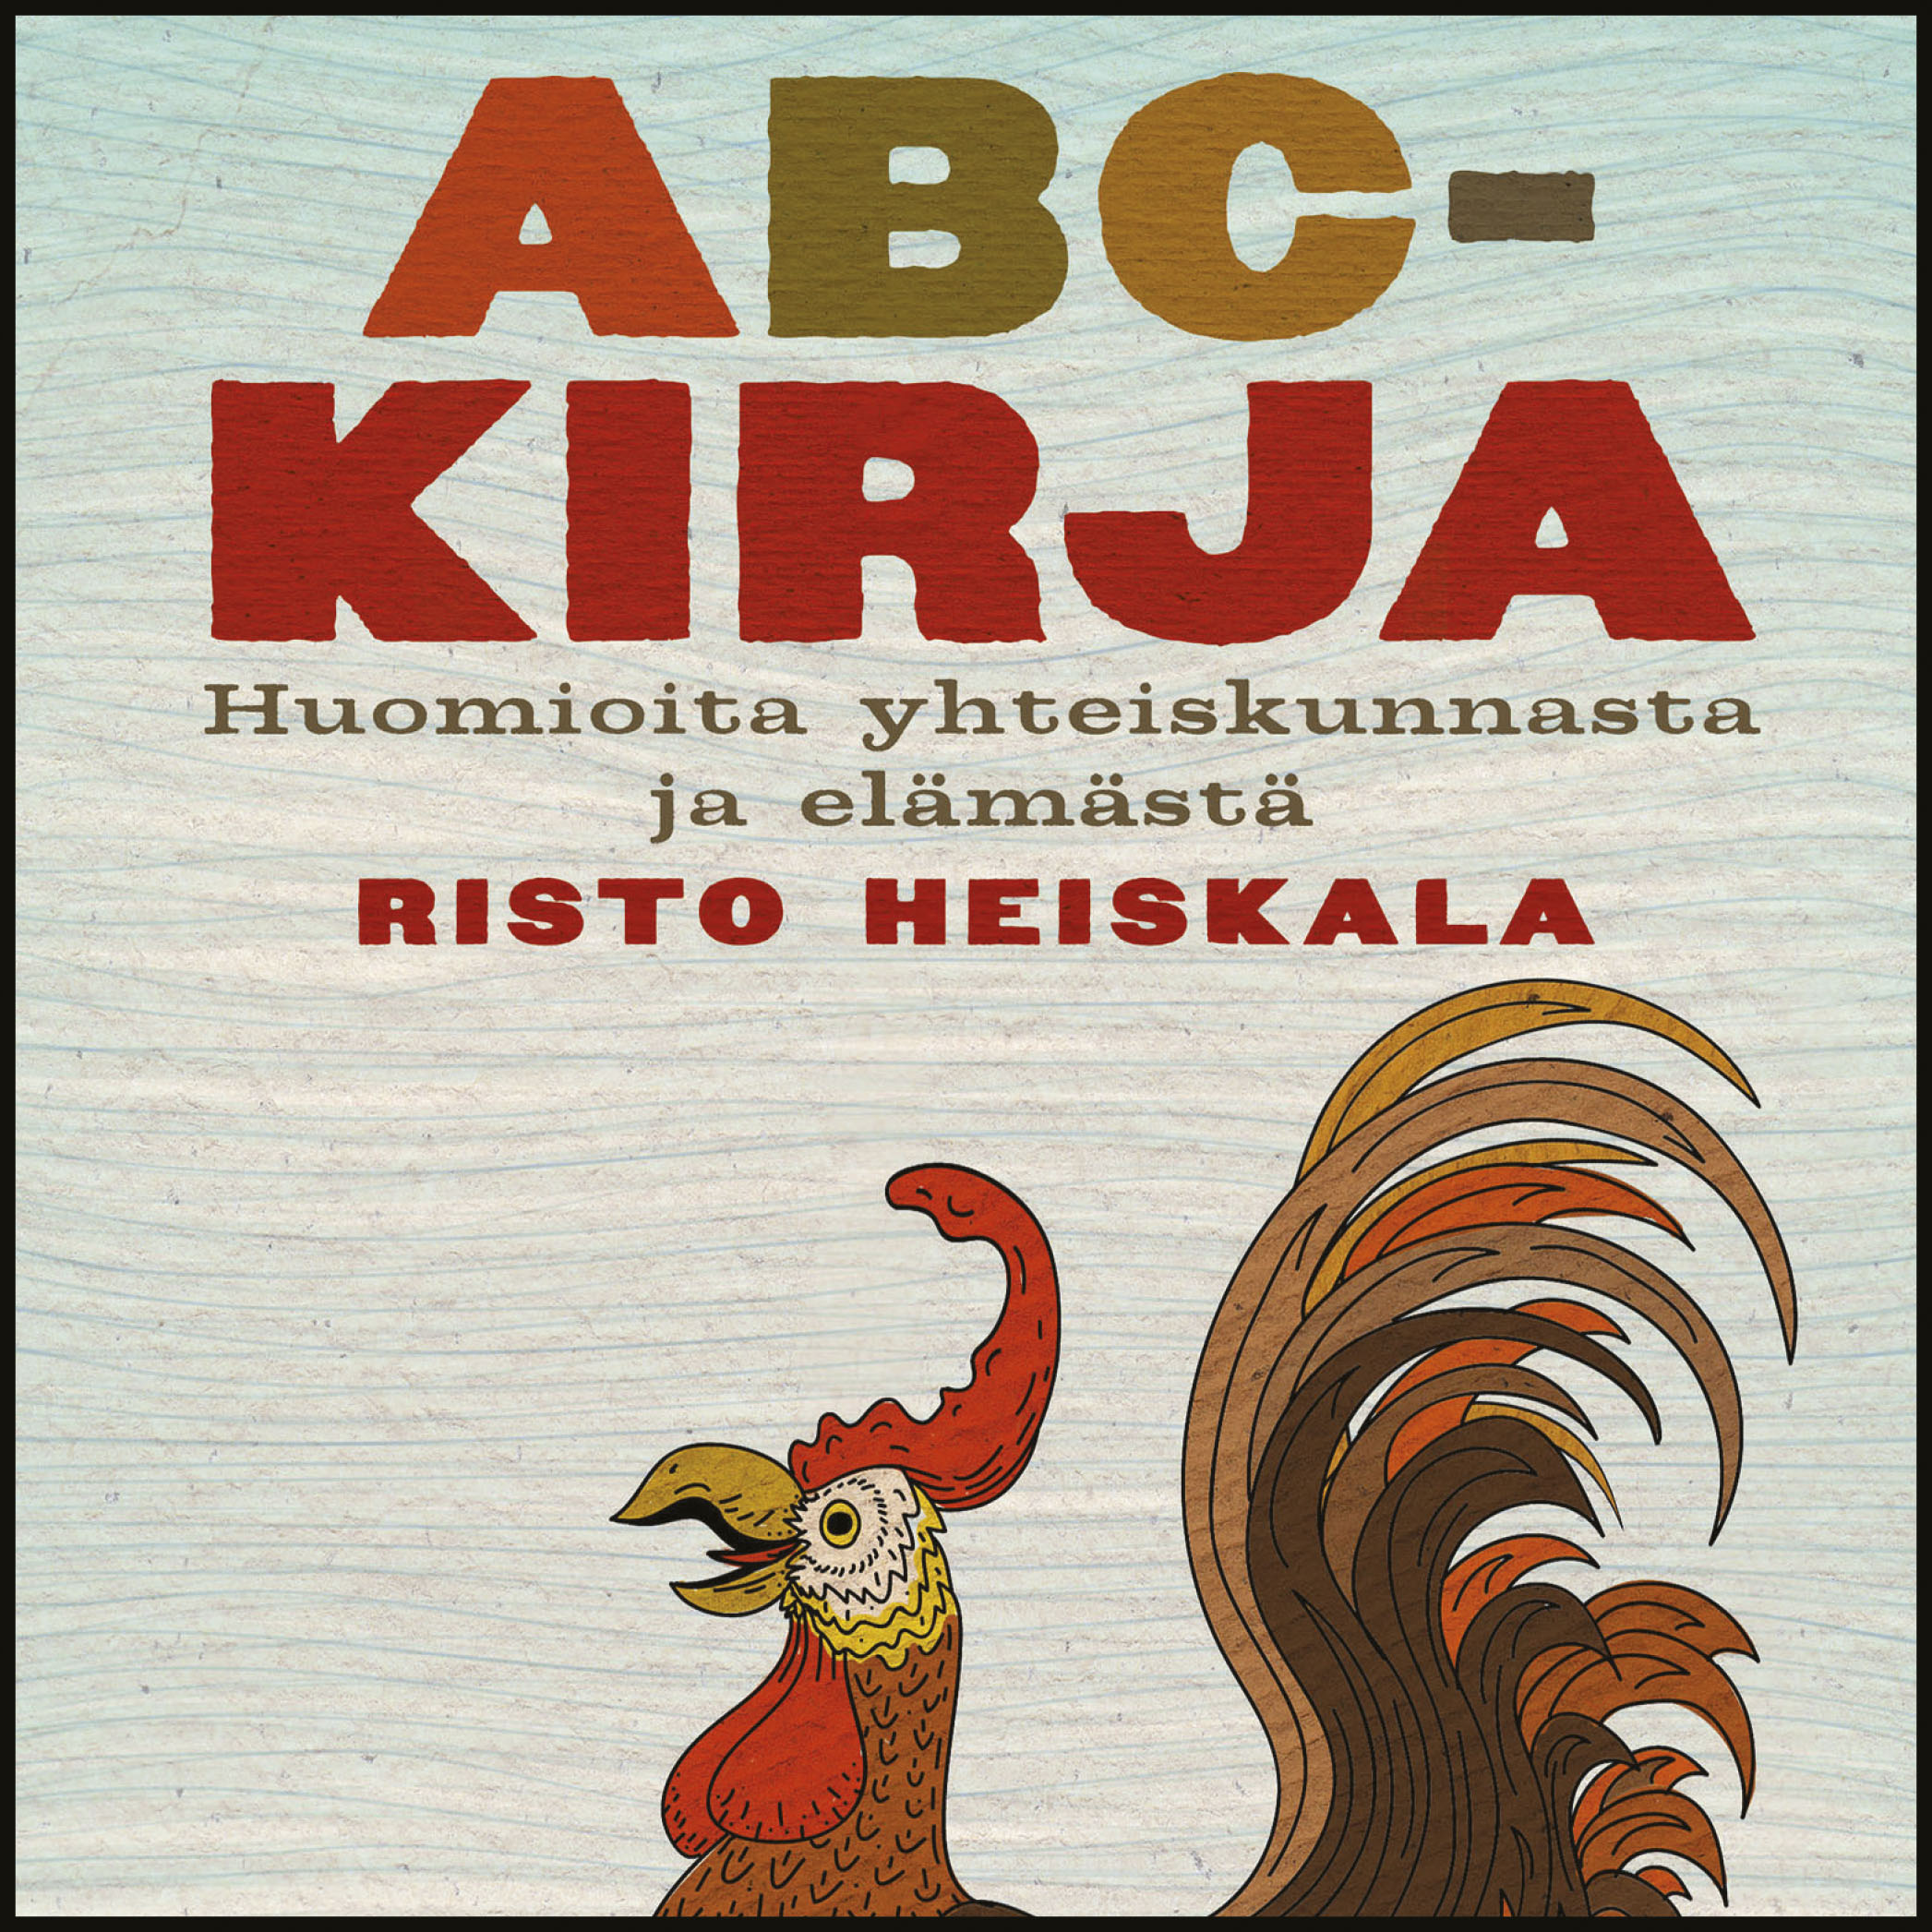 Heiskala, Risto - ABC-kirja, audiobook